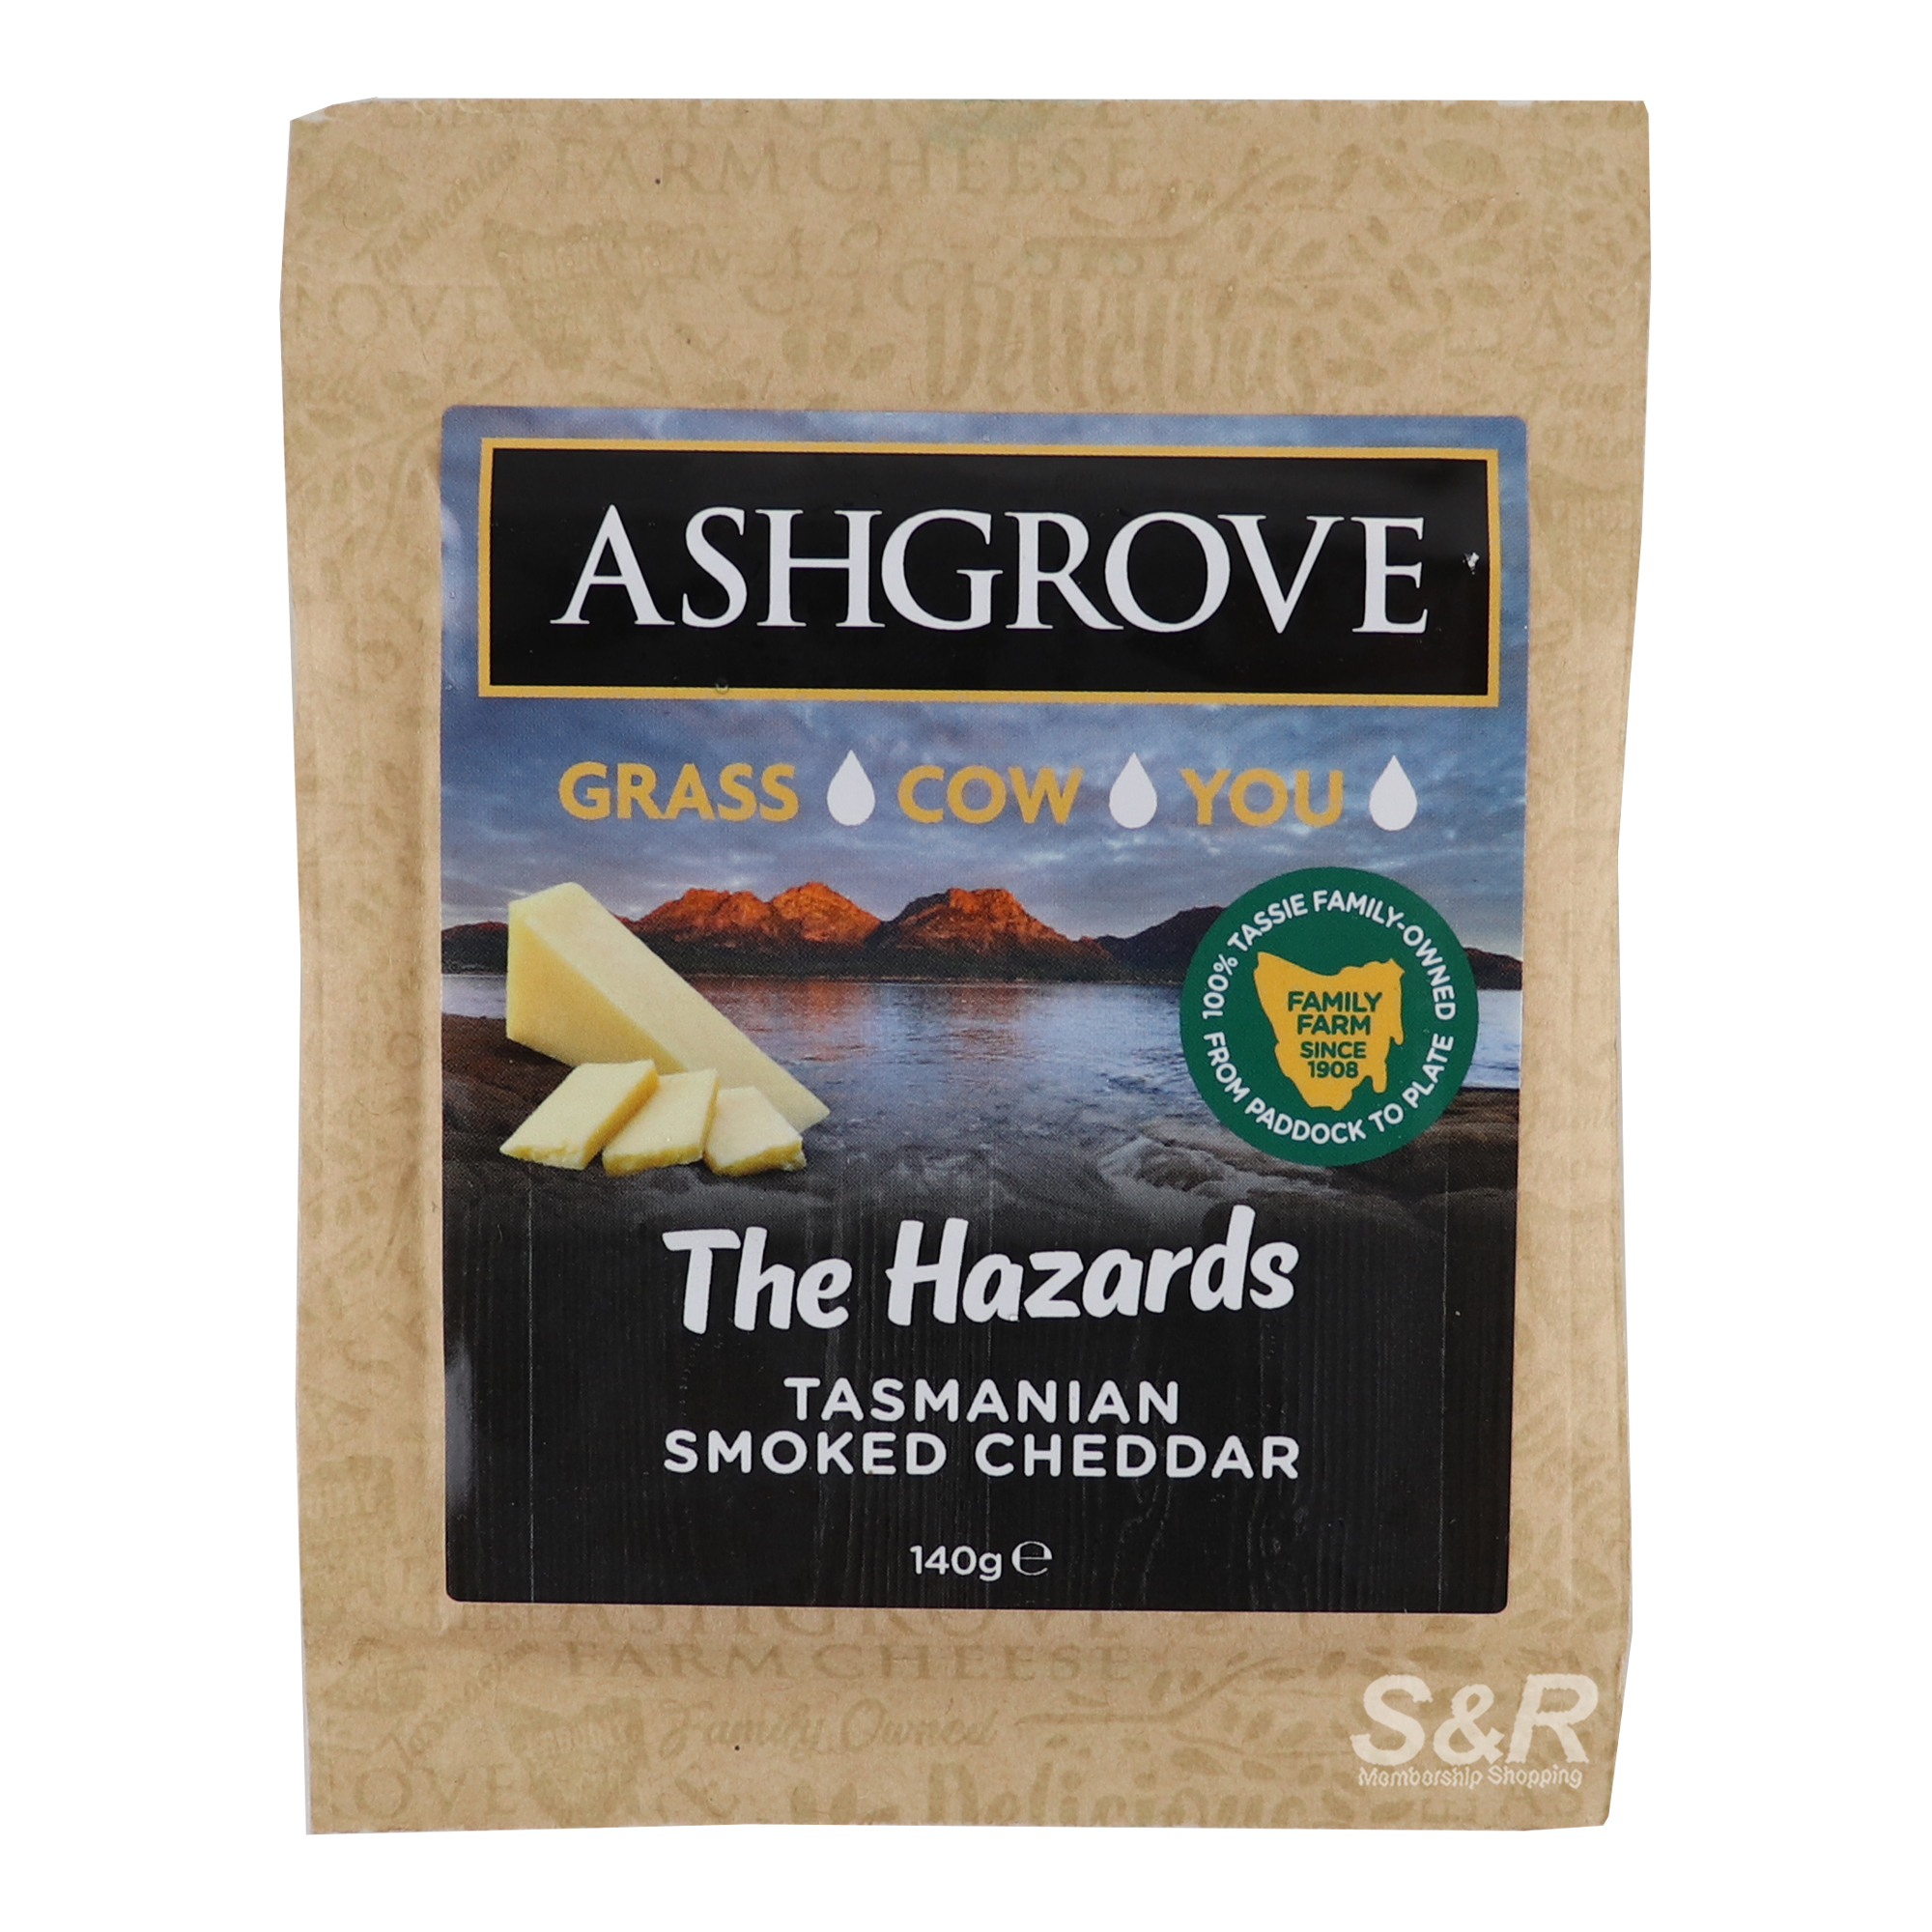 Ashgrove The Hazards Tasmanian Smoked Cheddar 140g